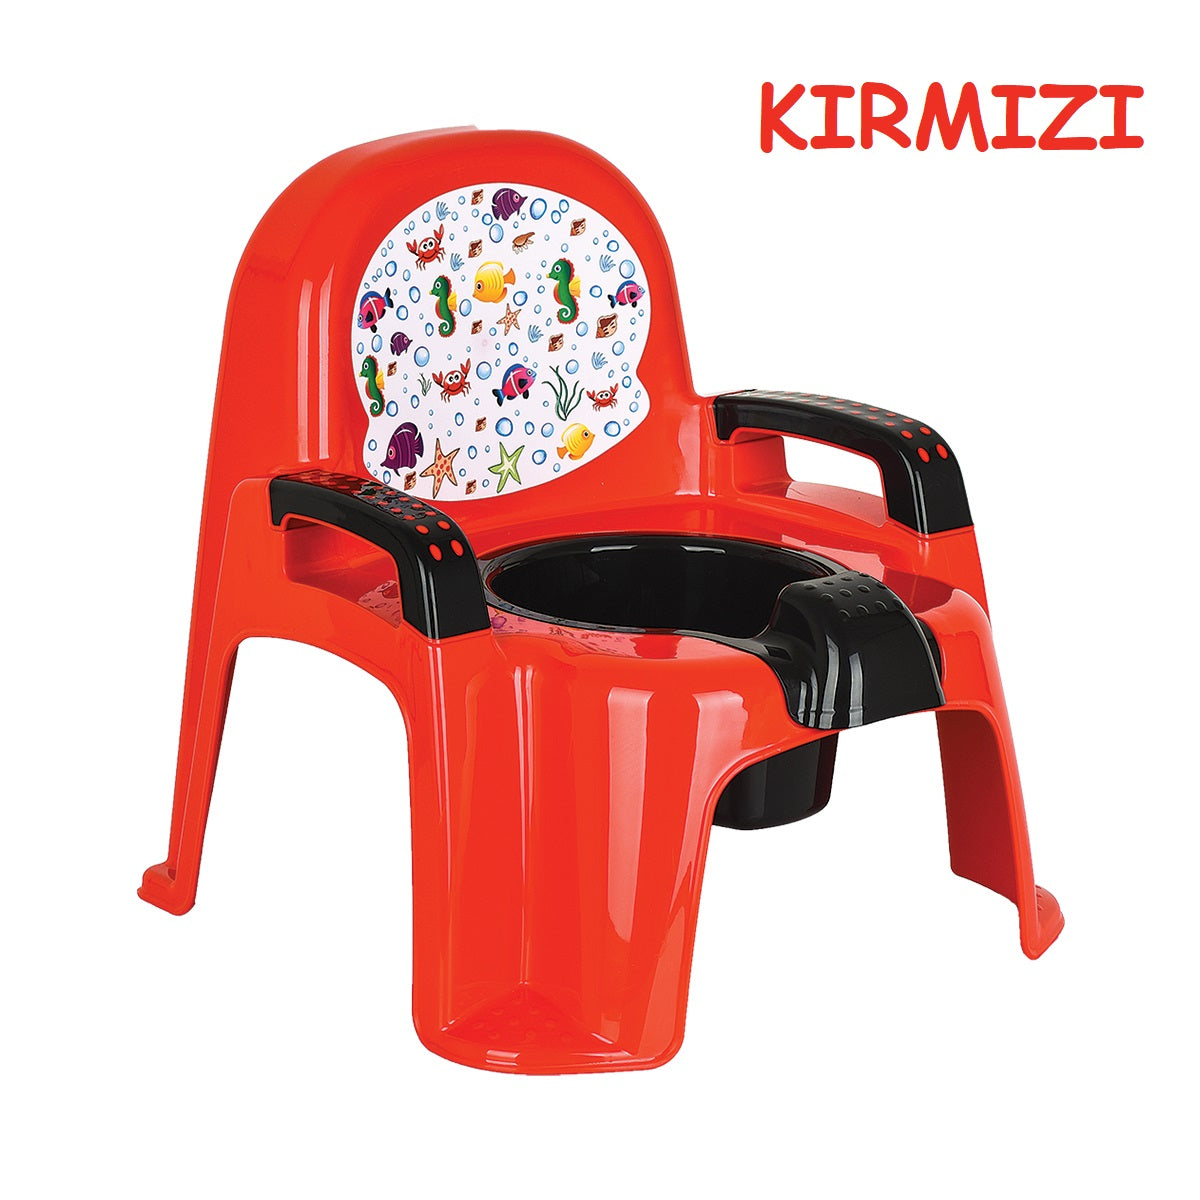 Moblen Afacan Baby Potty Trainer Chair Assorted Colours 33 x 30 x 30 cm CM135 (Parcel Rate)